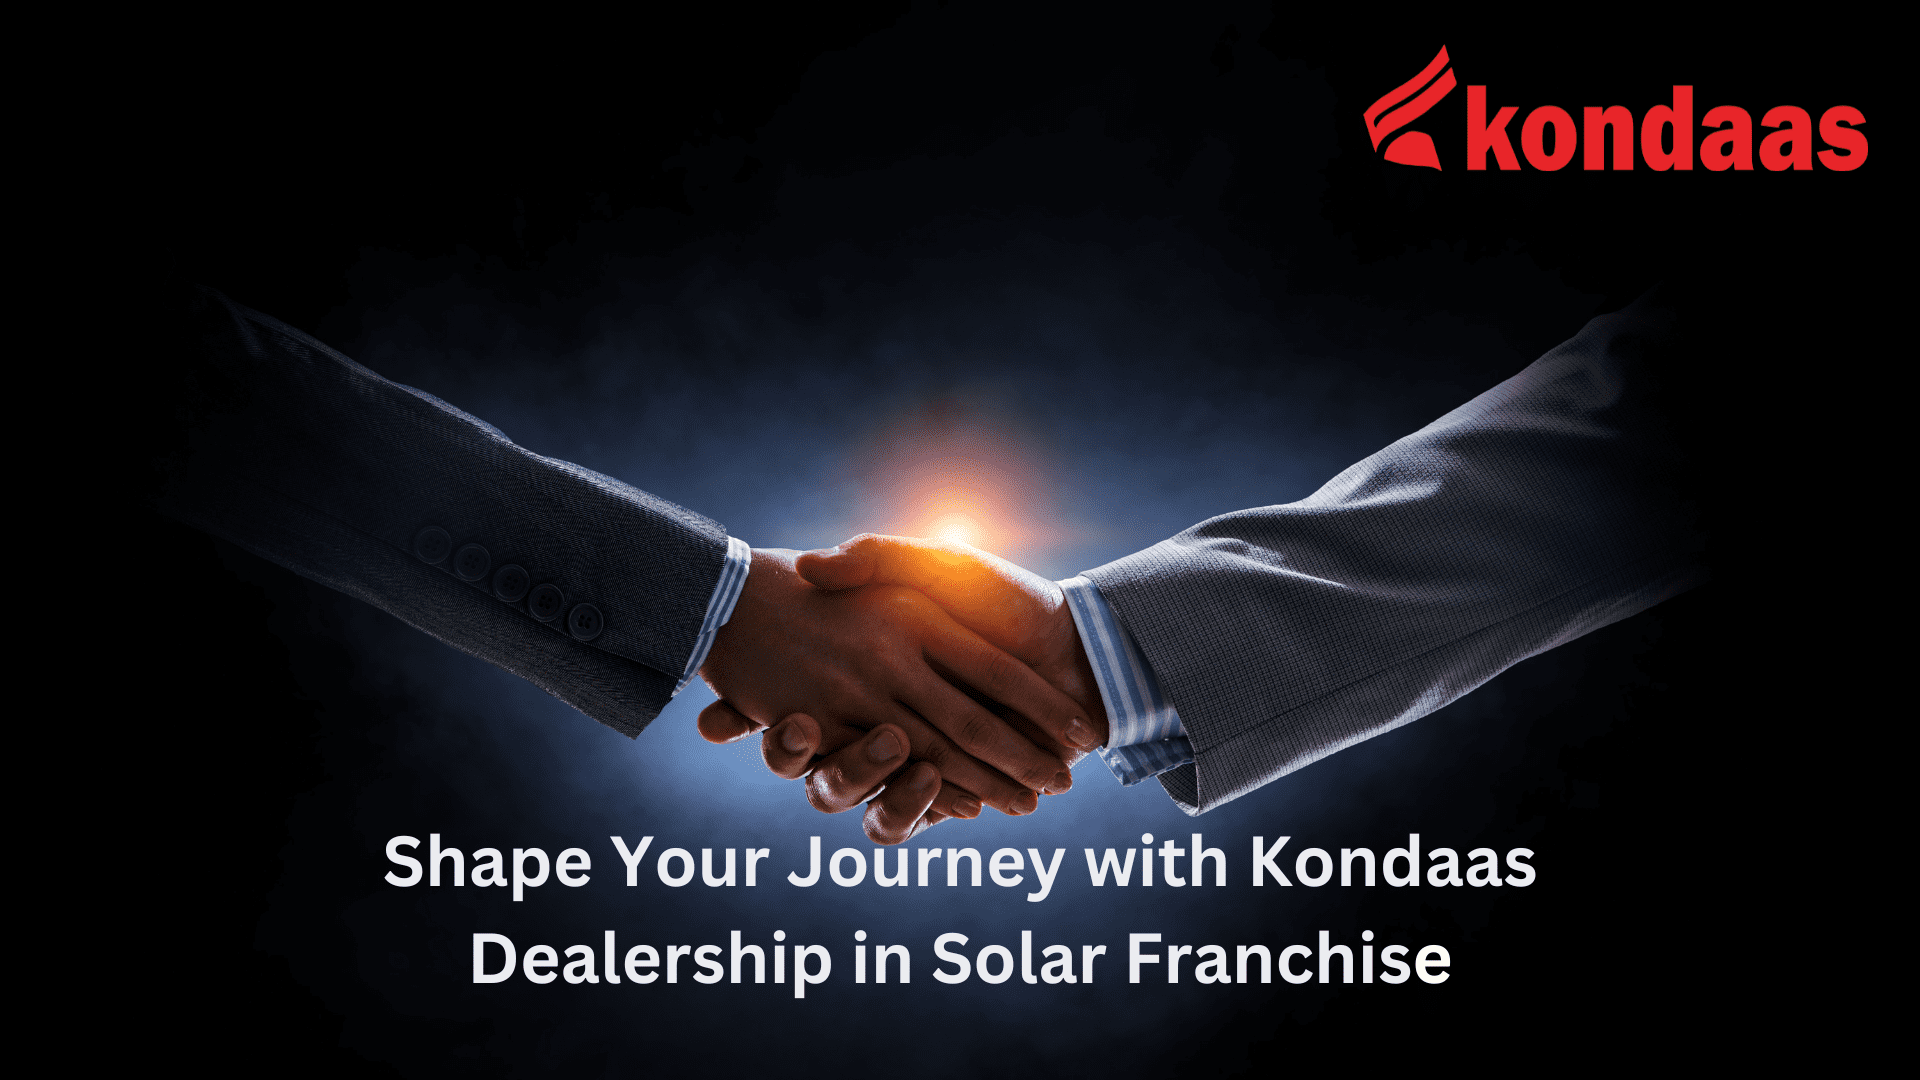 Dealership in Solar Franchise